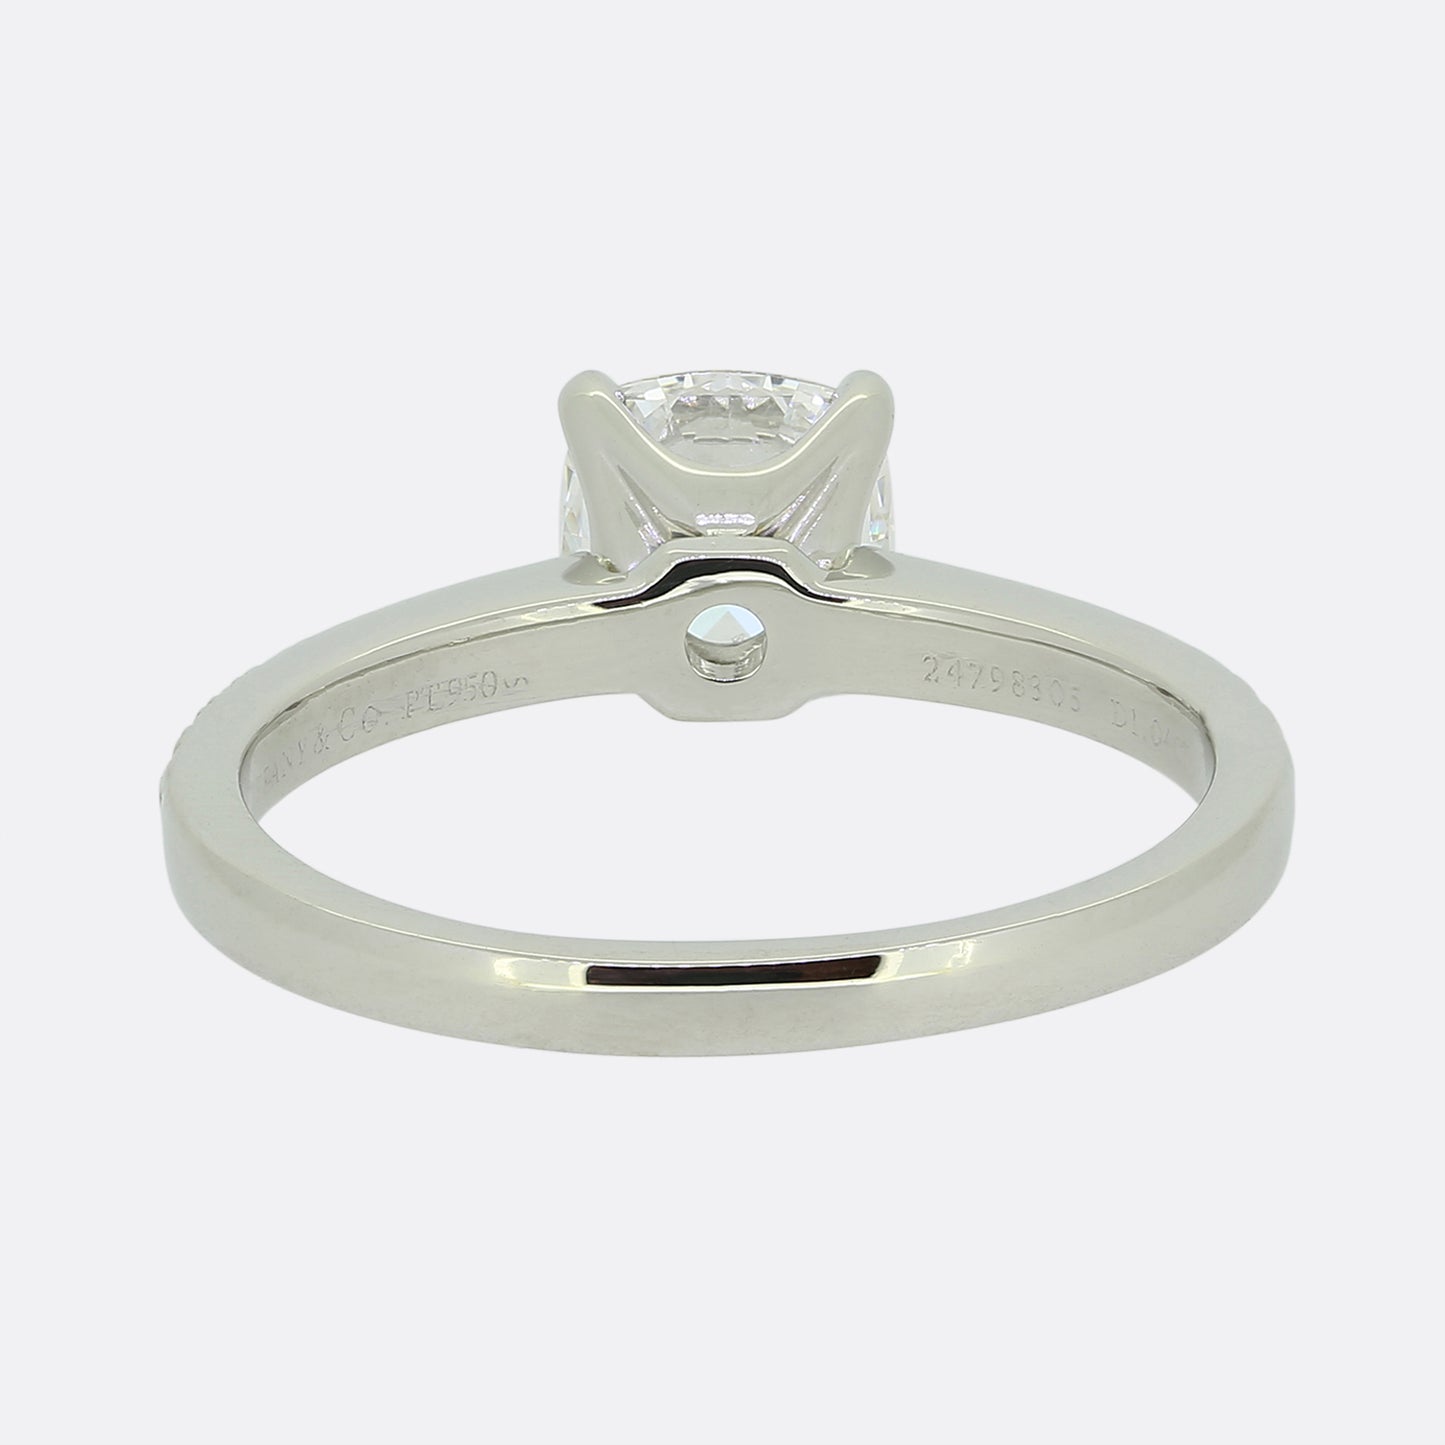 Tiffany & Co. 1.04 Carat Diamond Engagement Ring